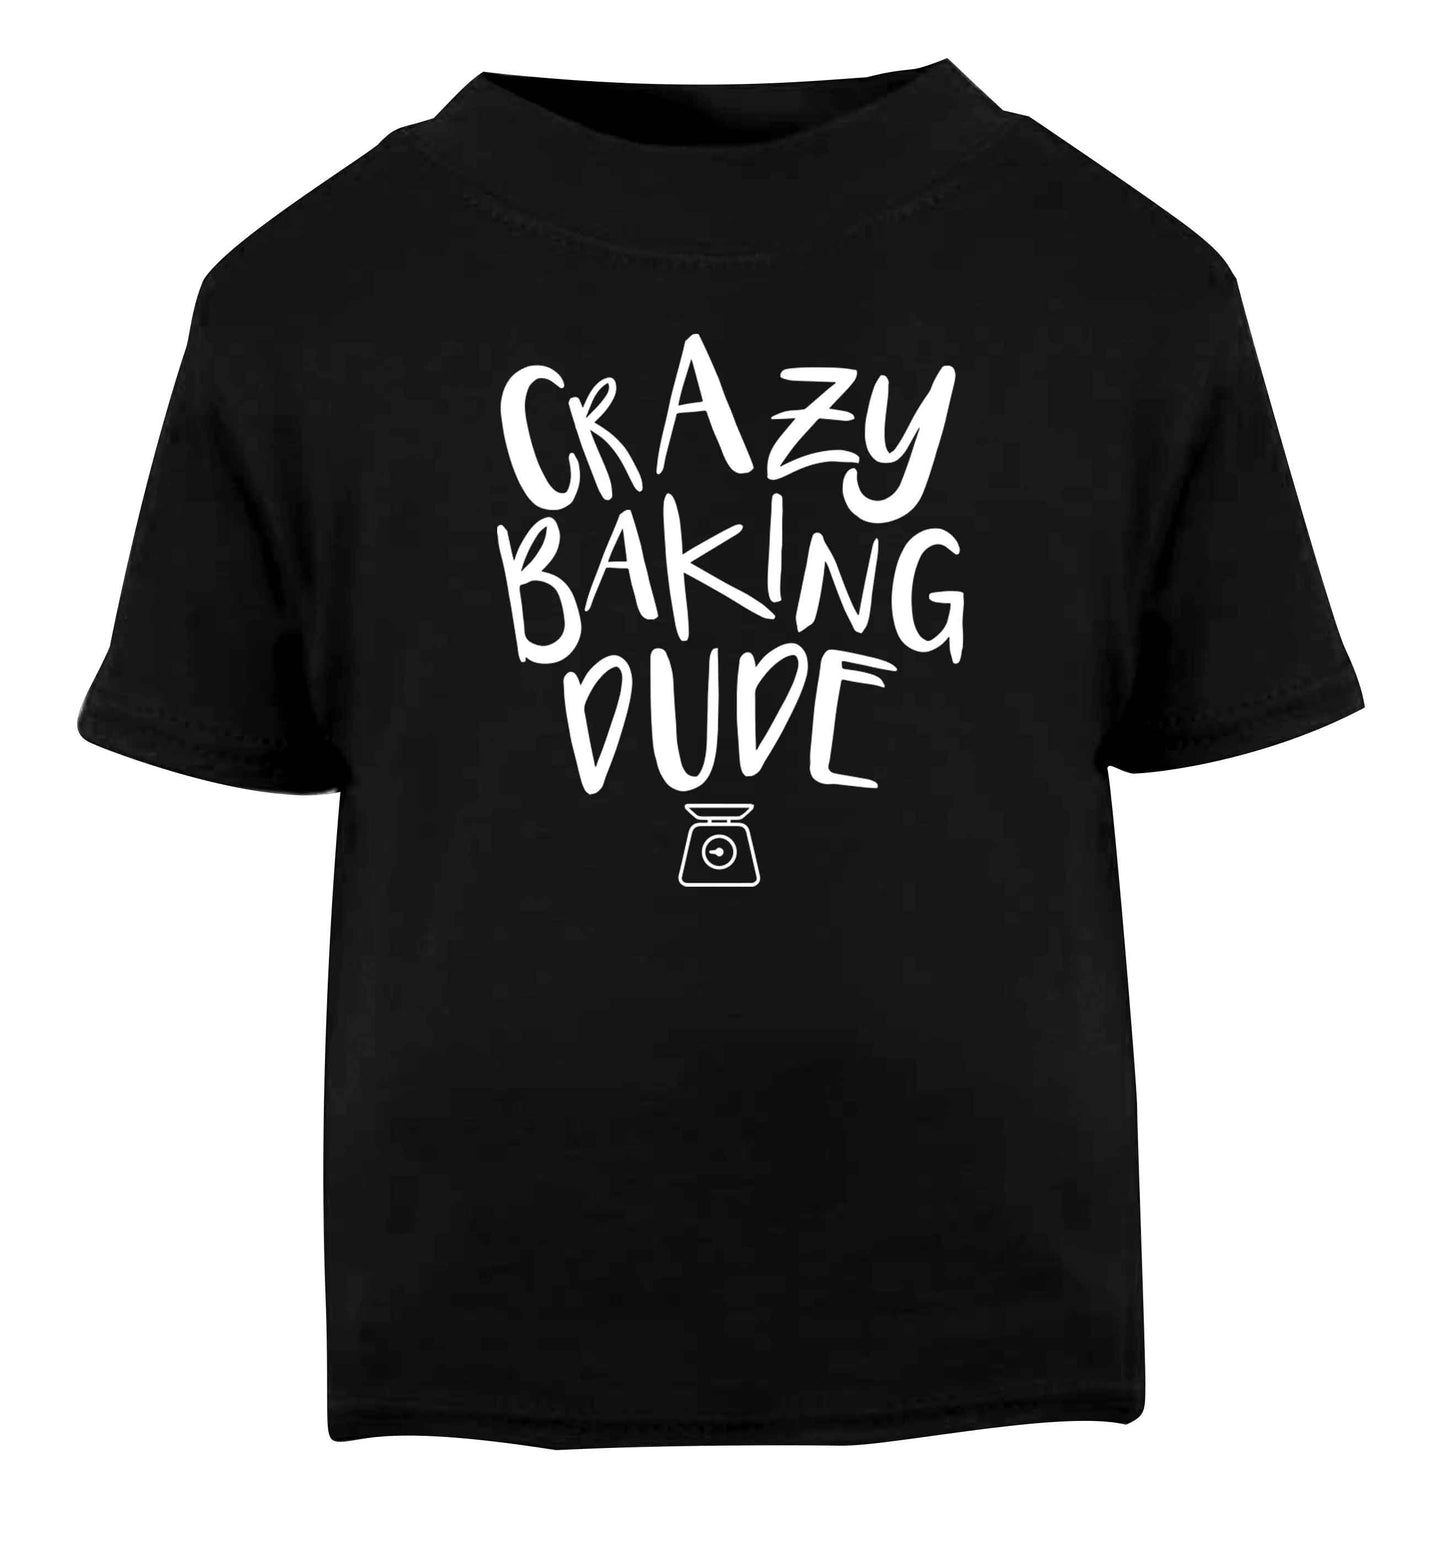 Crazy baking dude Black Baby Toddler Tshirt 2 years